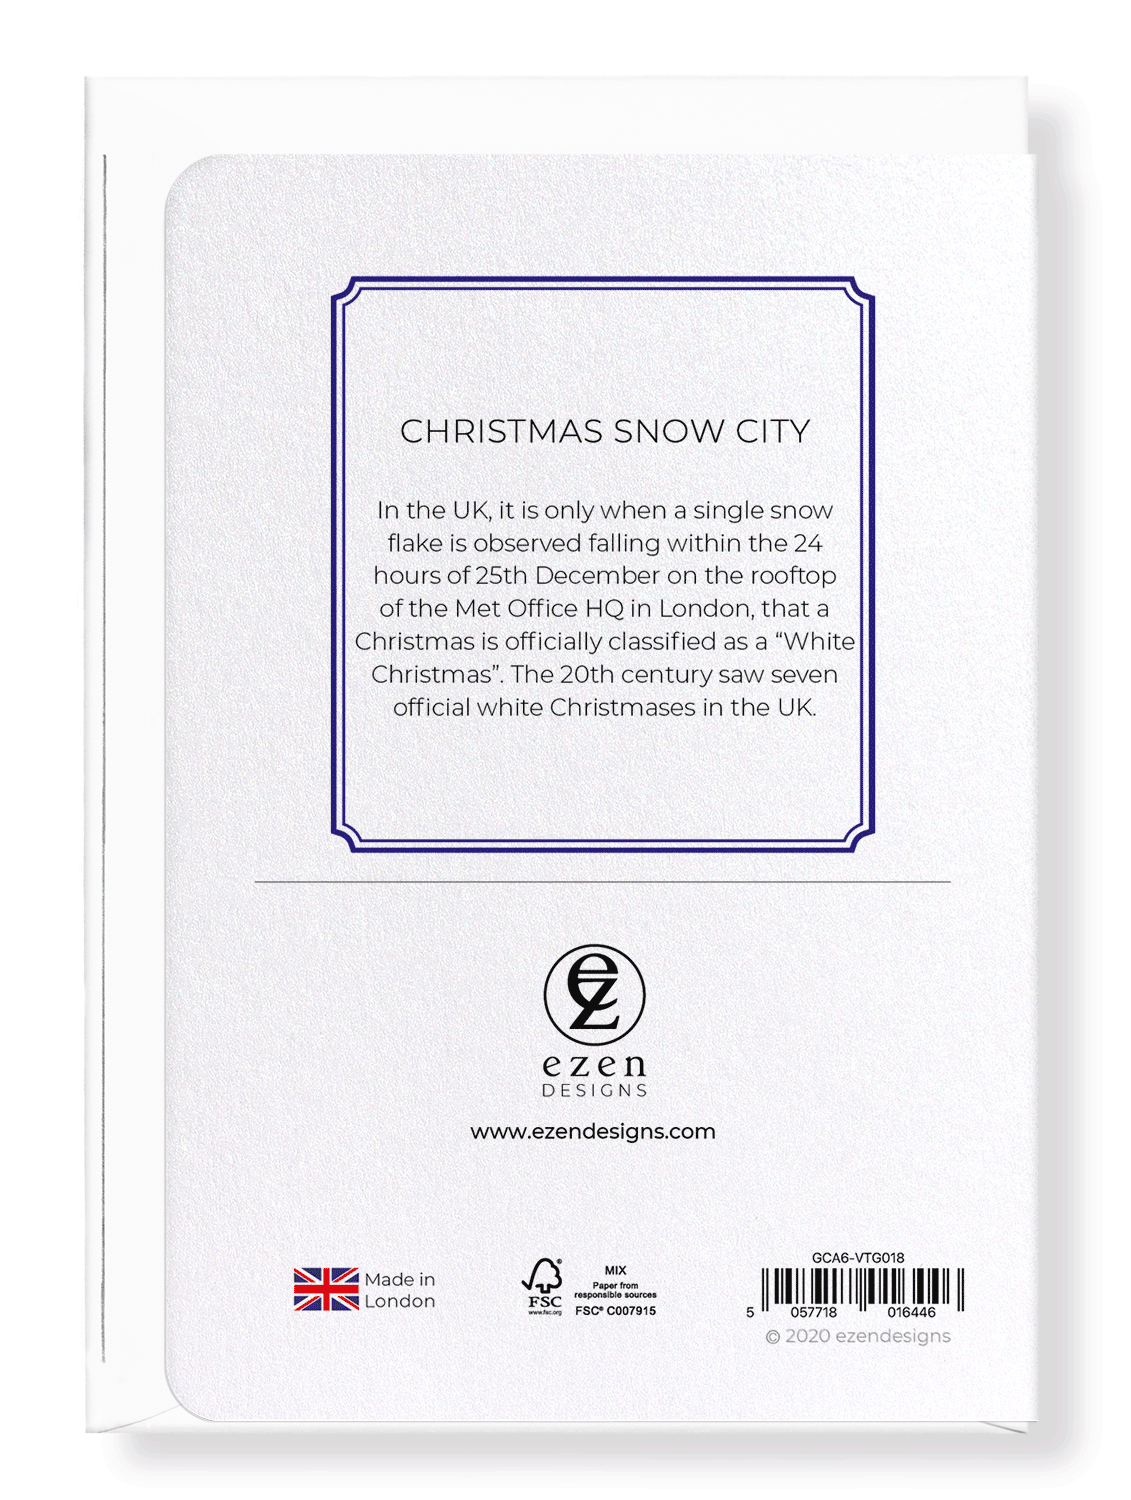 Ezen Designs - Christmas snow city - Greeting Card - Back